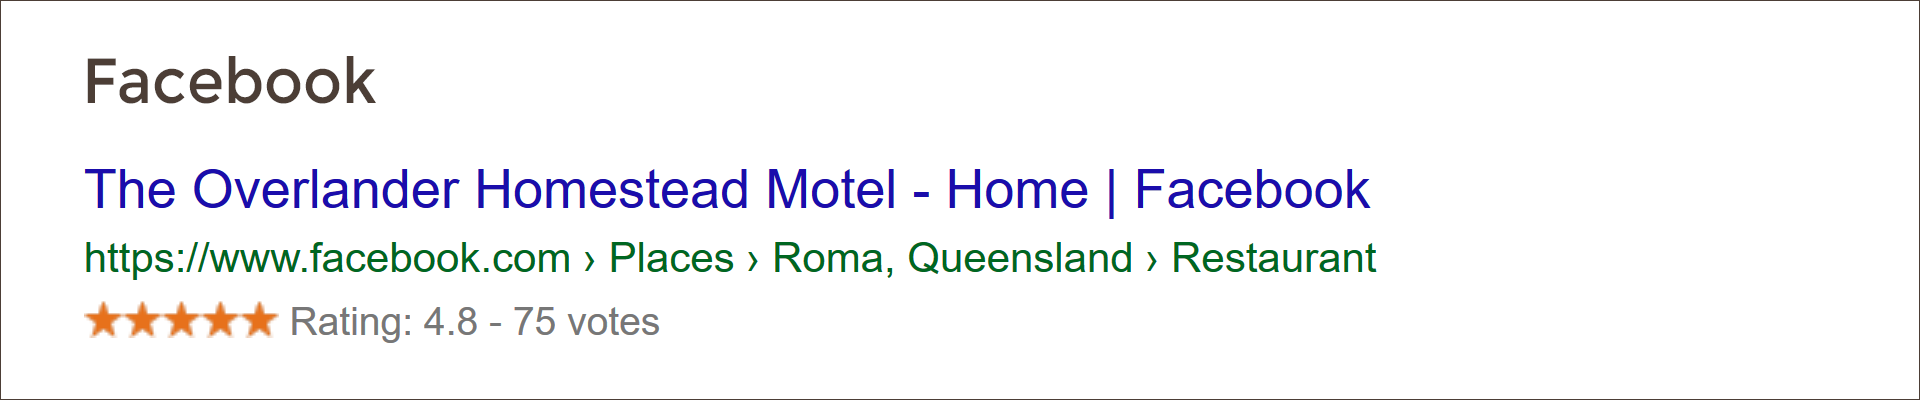 Facebook Reviews of The Overlander Homestead Motel Roma Queensland